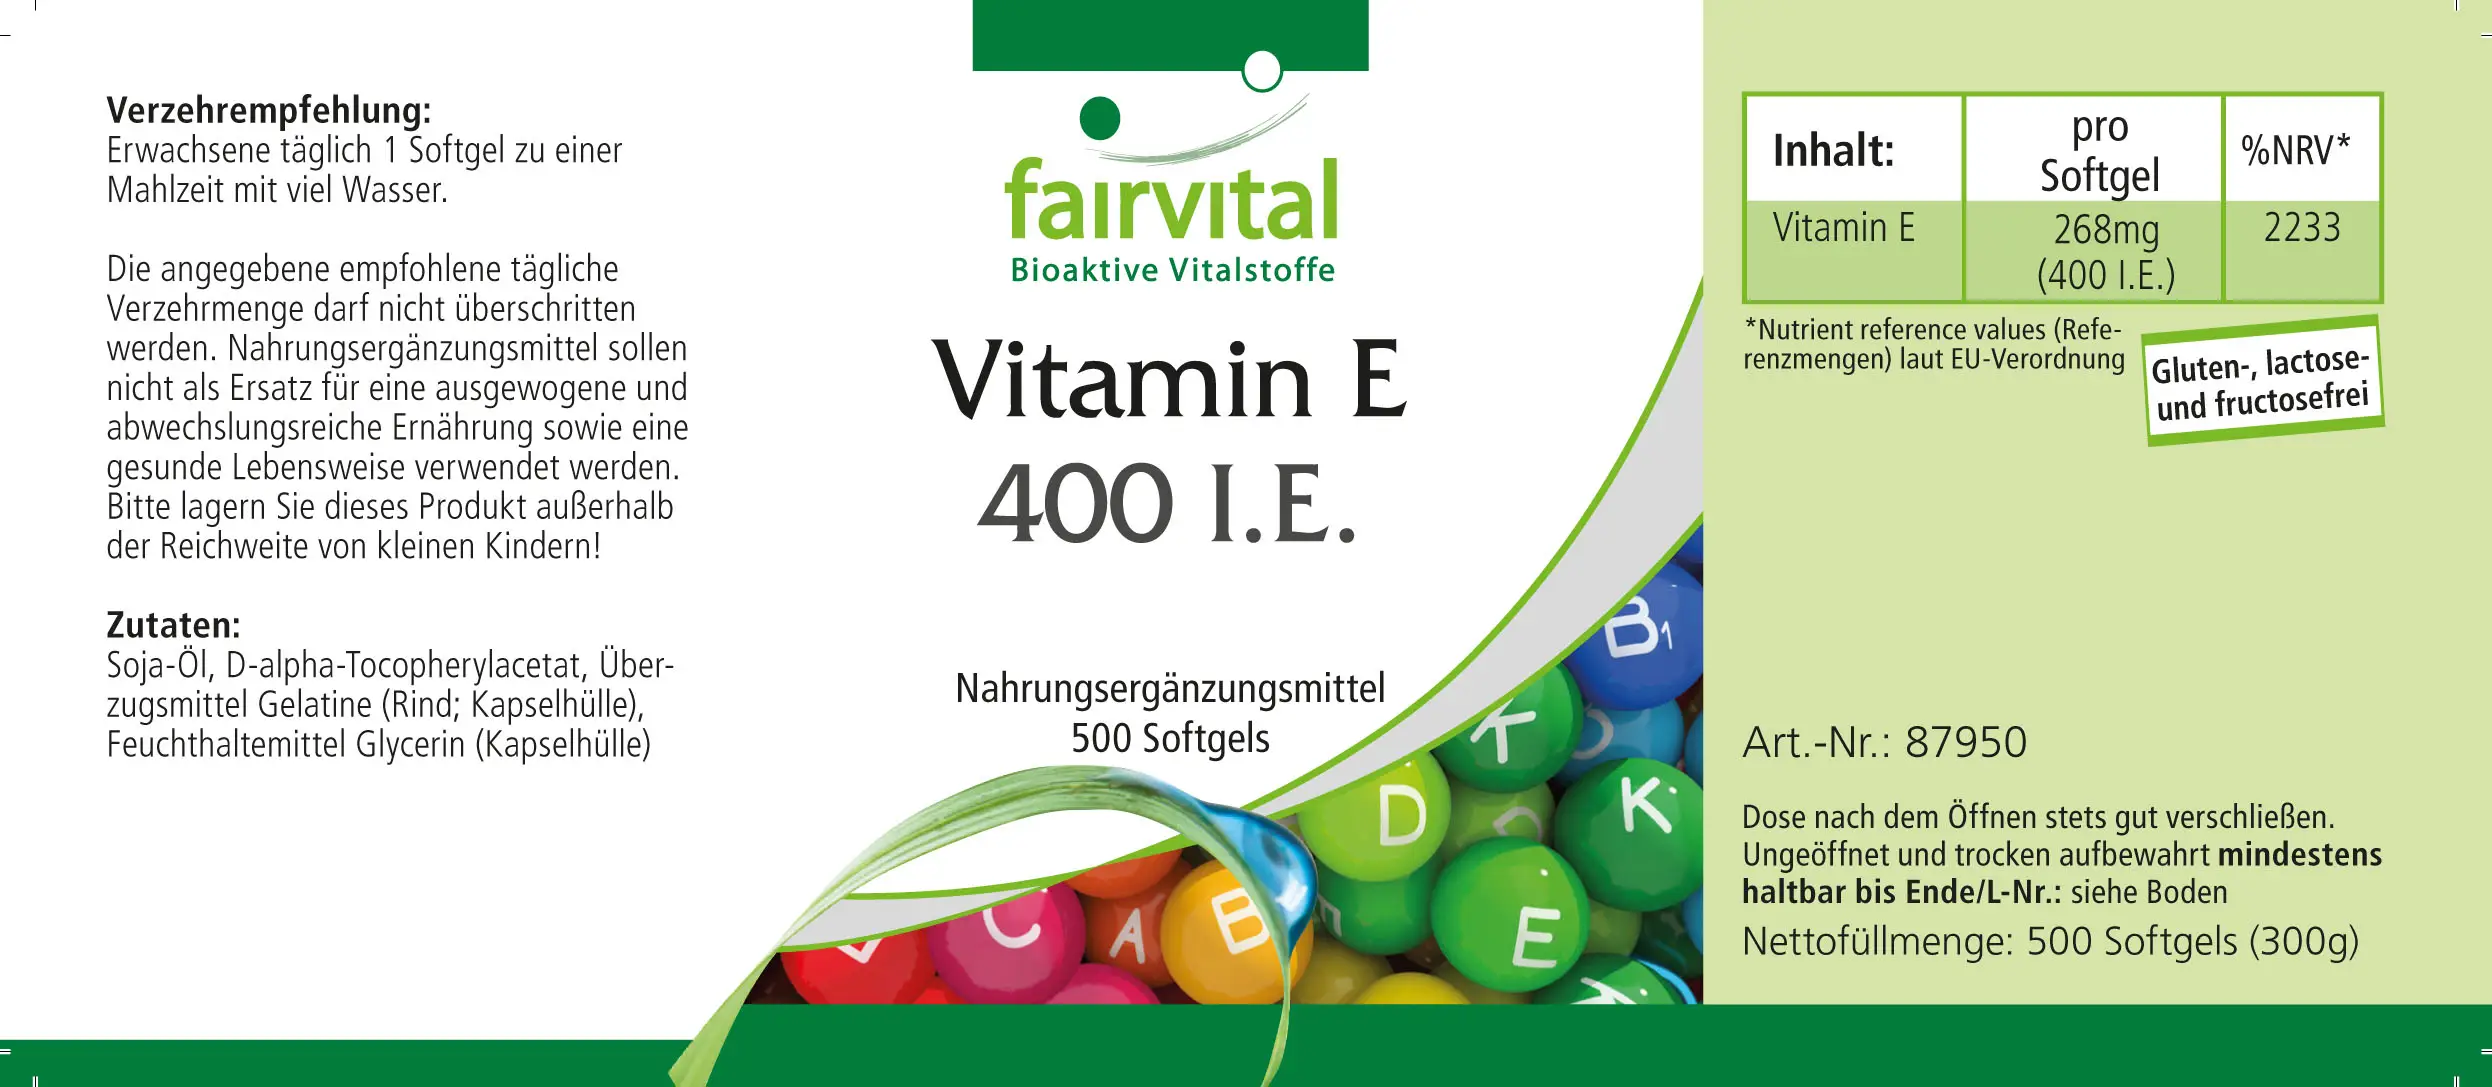 Vitamina E 400 U.I. confezione grande – 500 Softgel